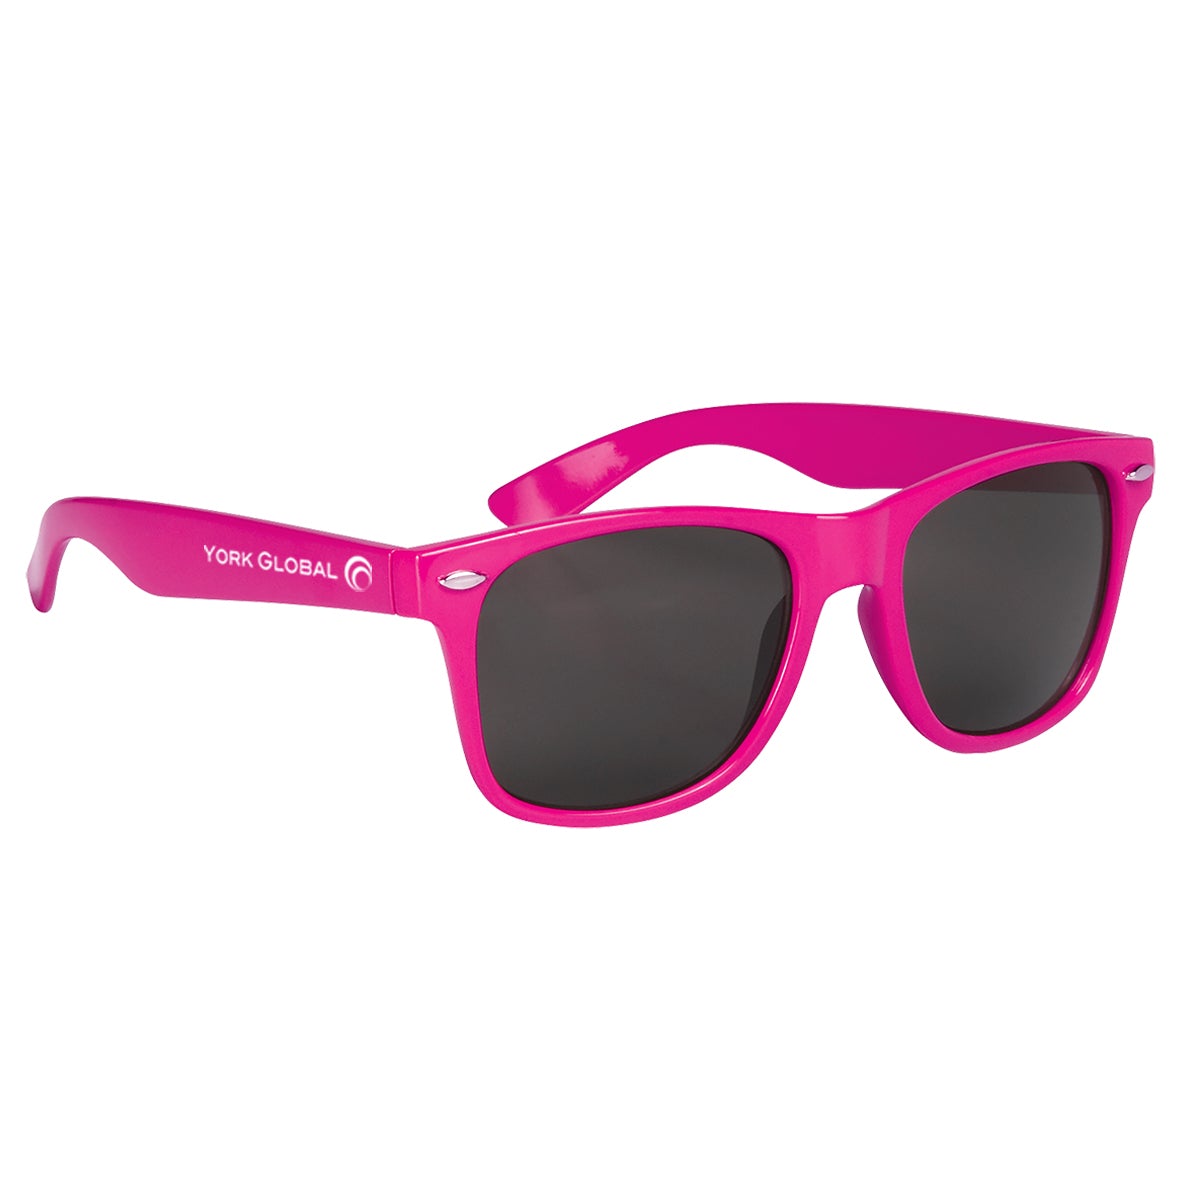 Malibu Sunglasses Sunglasses Hit Promo Magenta Single Color 